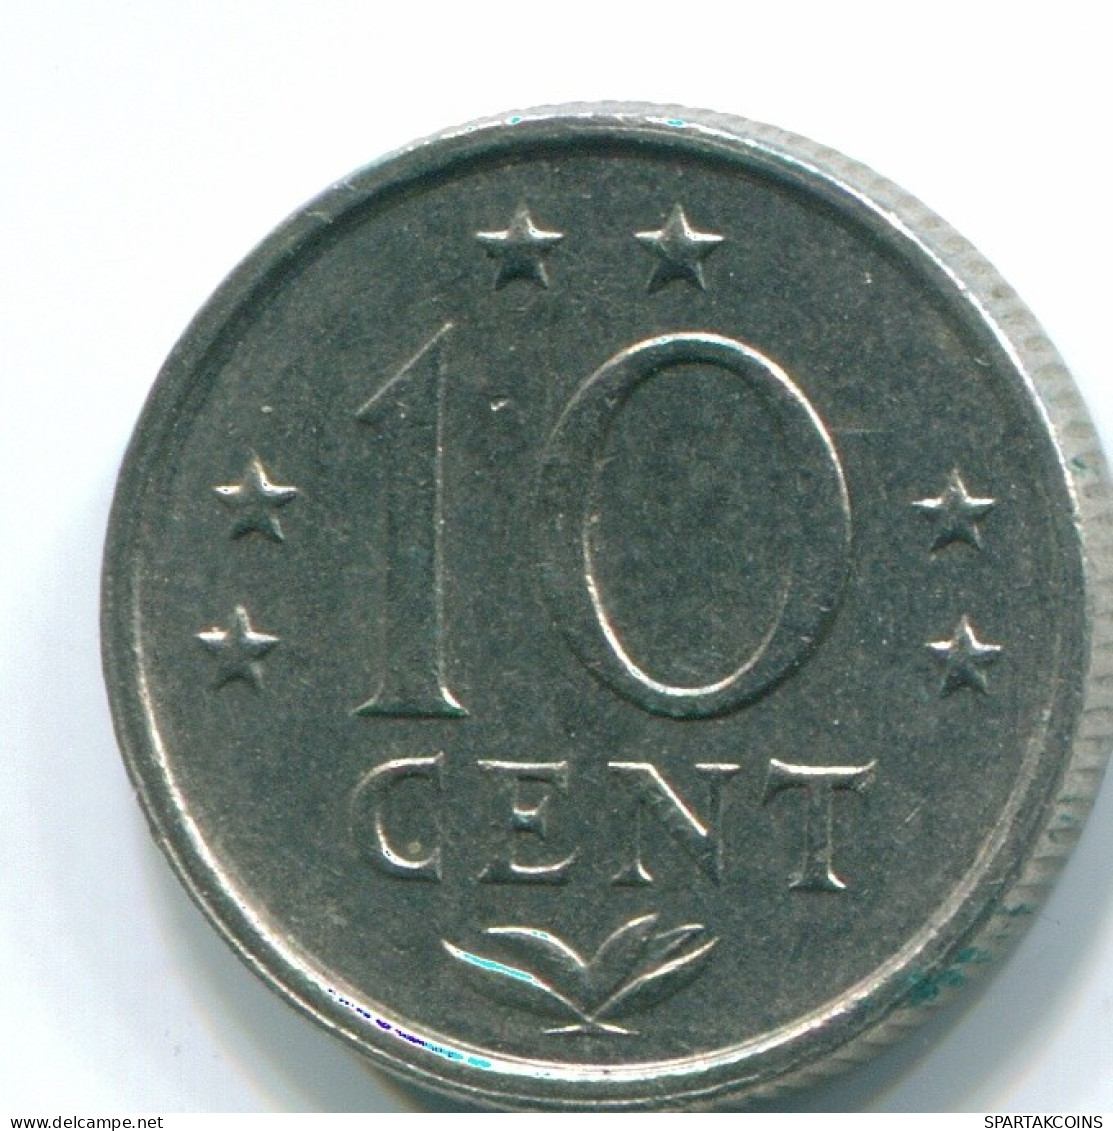 10 CENTS 1978 NIEDERLÄNDISCHE ANTILLEN Nickel Koloniale Münze #S13578.D.A - Netherlands Antilles